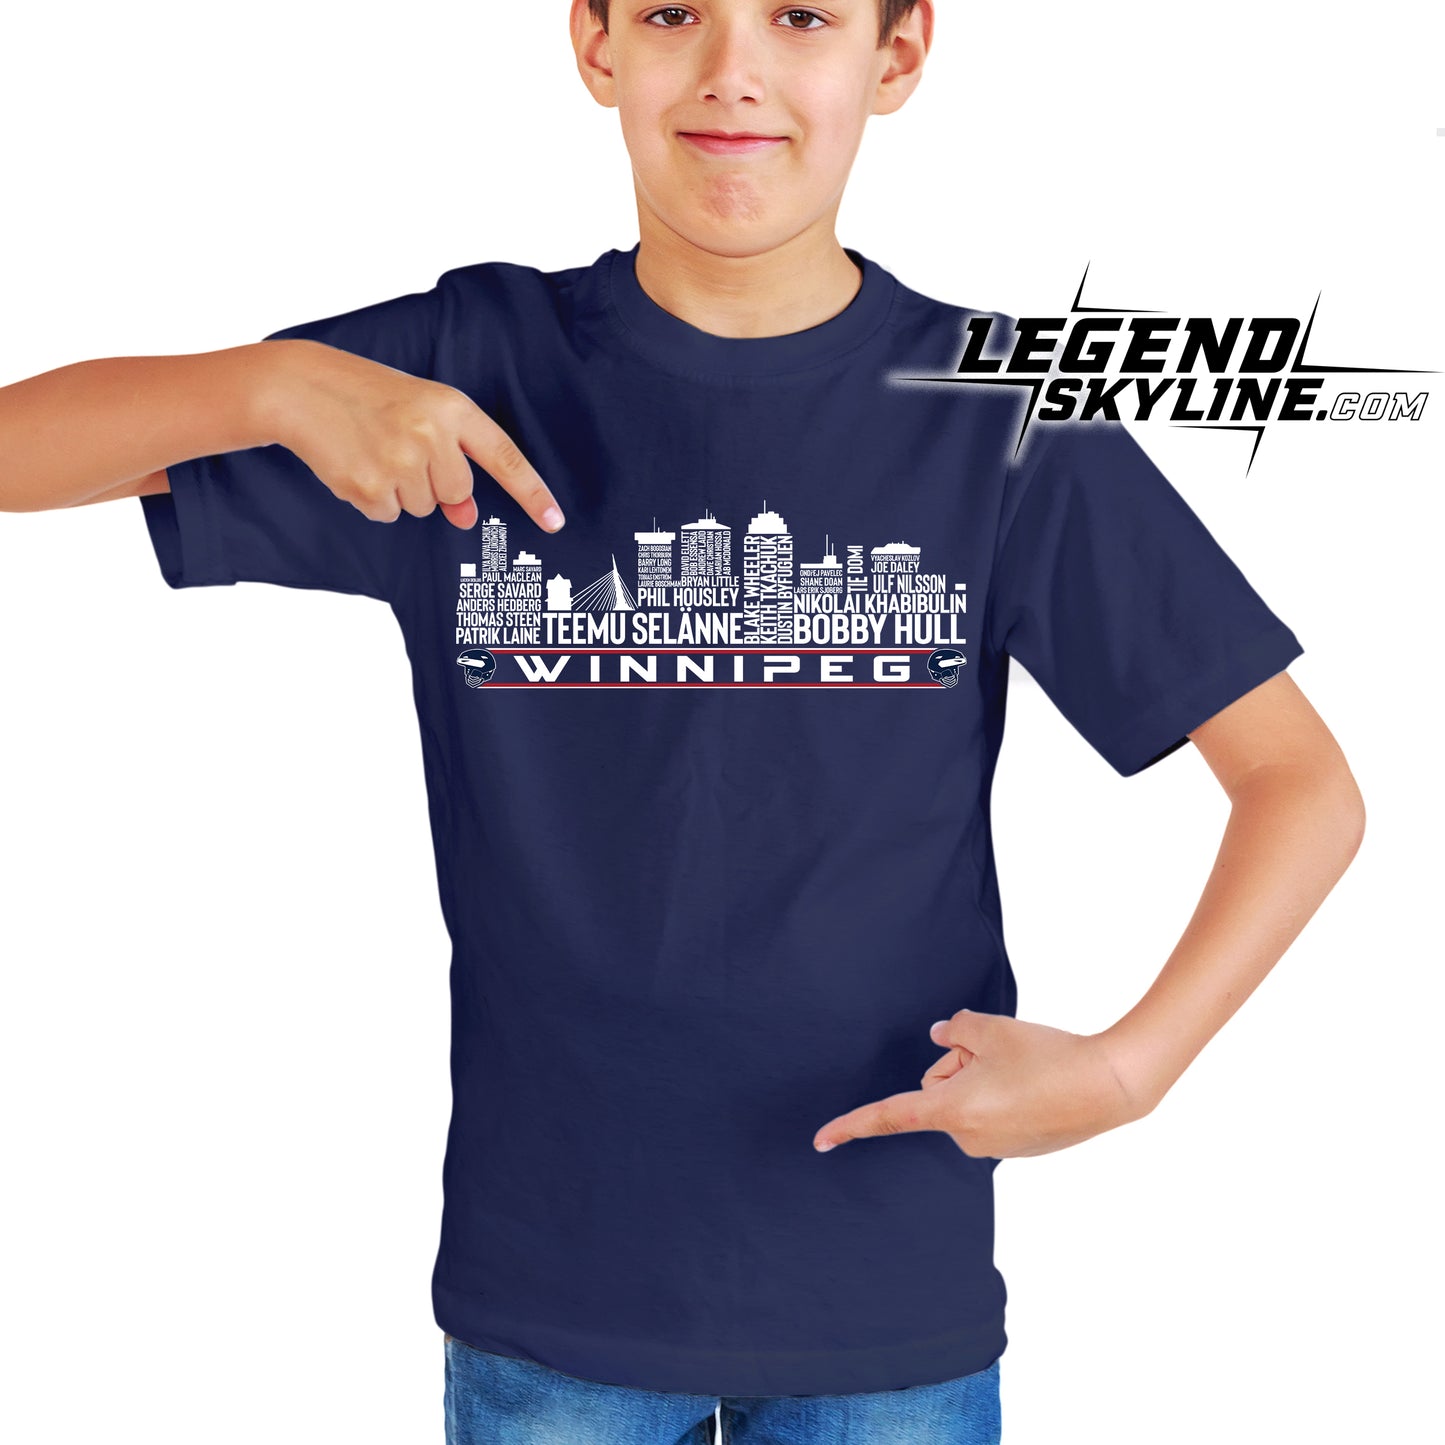 Winnipeg Hockey Team All Time Legends Winnipeg Skyline Shirt